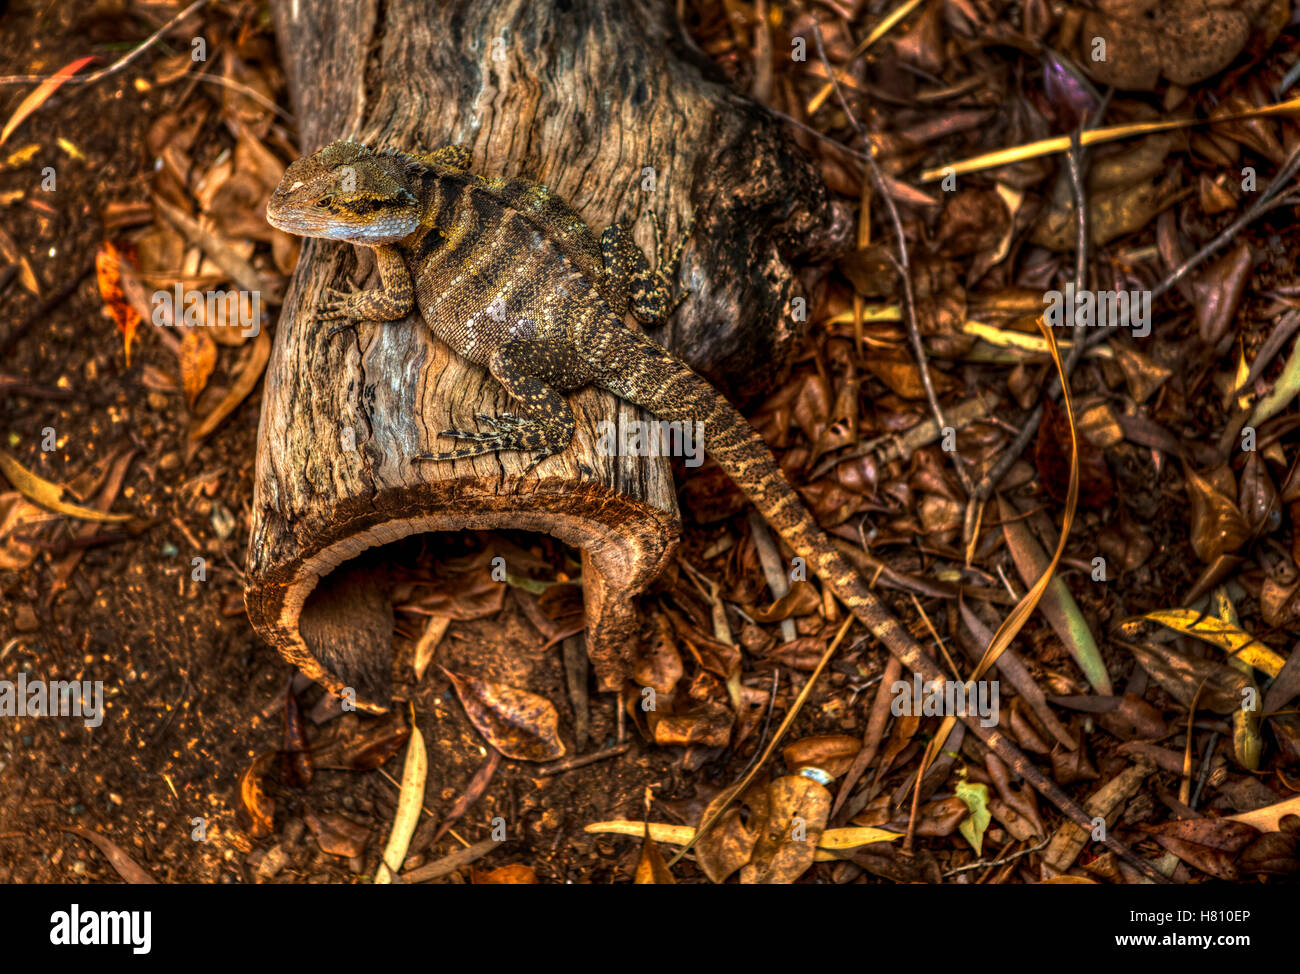 Reptile d'Australie sitting on wooden log Banque D'Images